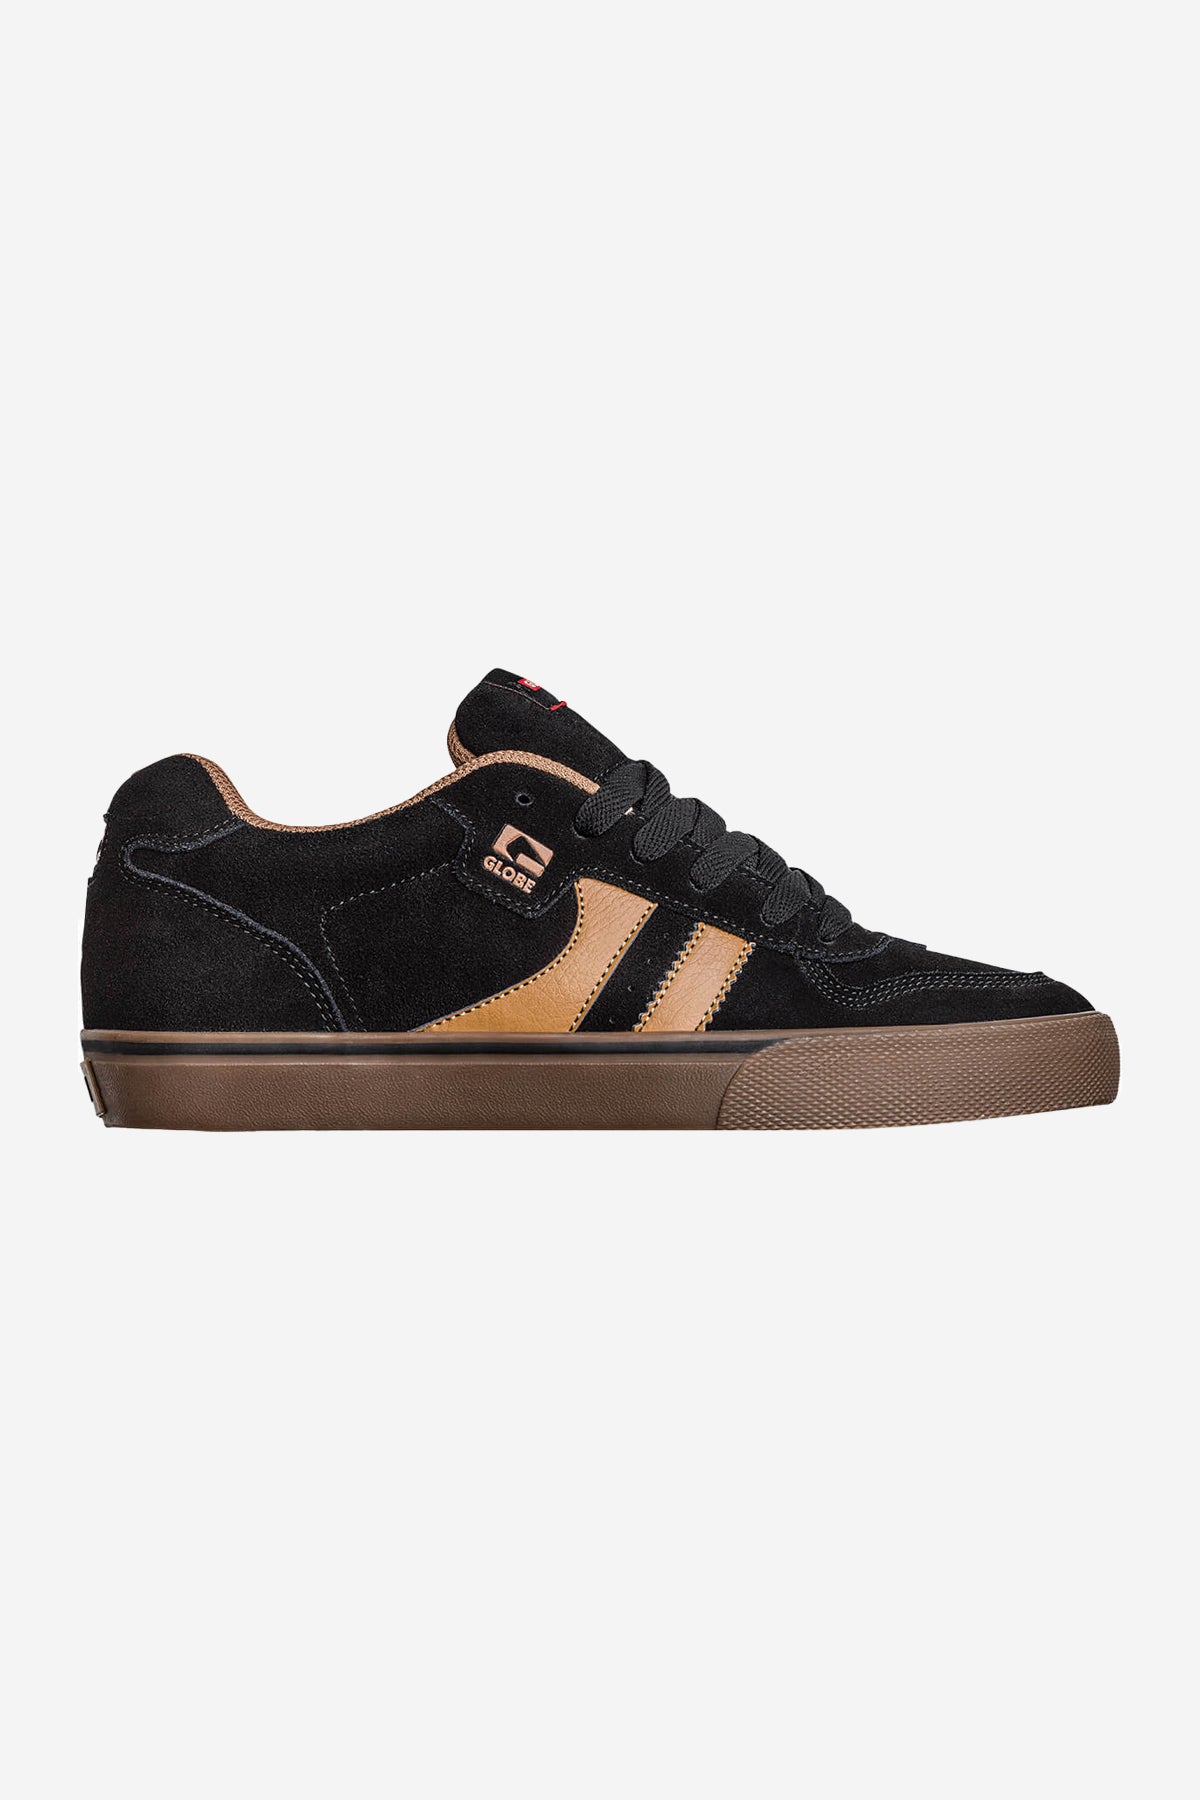 encore-2 nero marrone skateboard scarpe